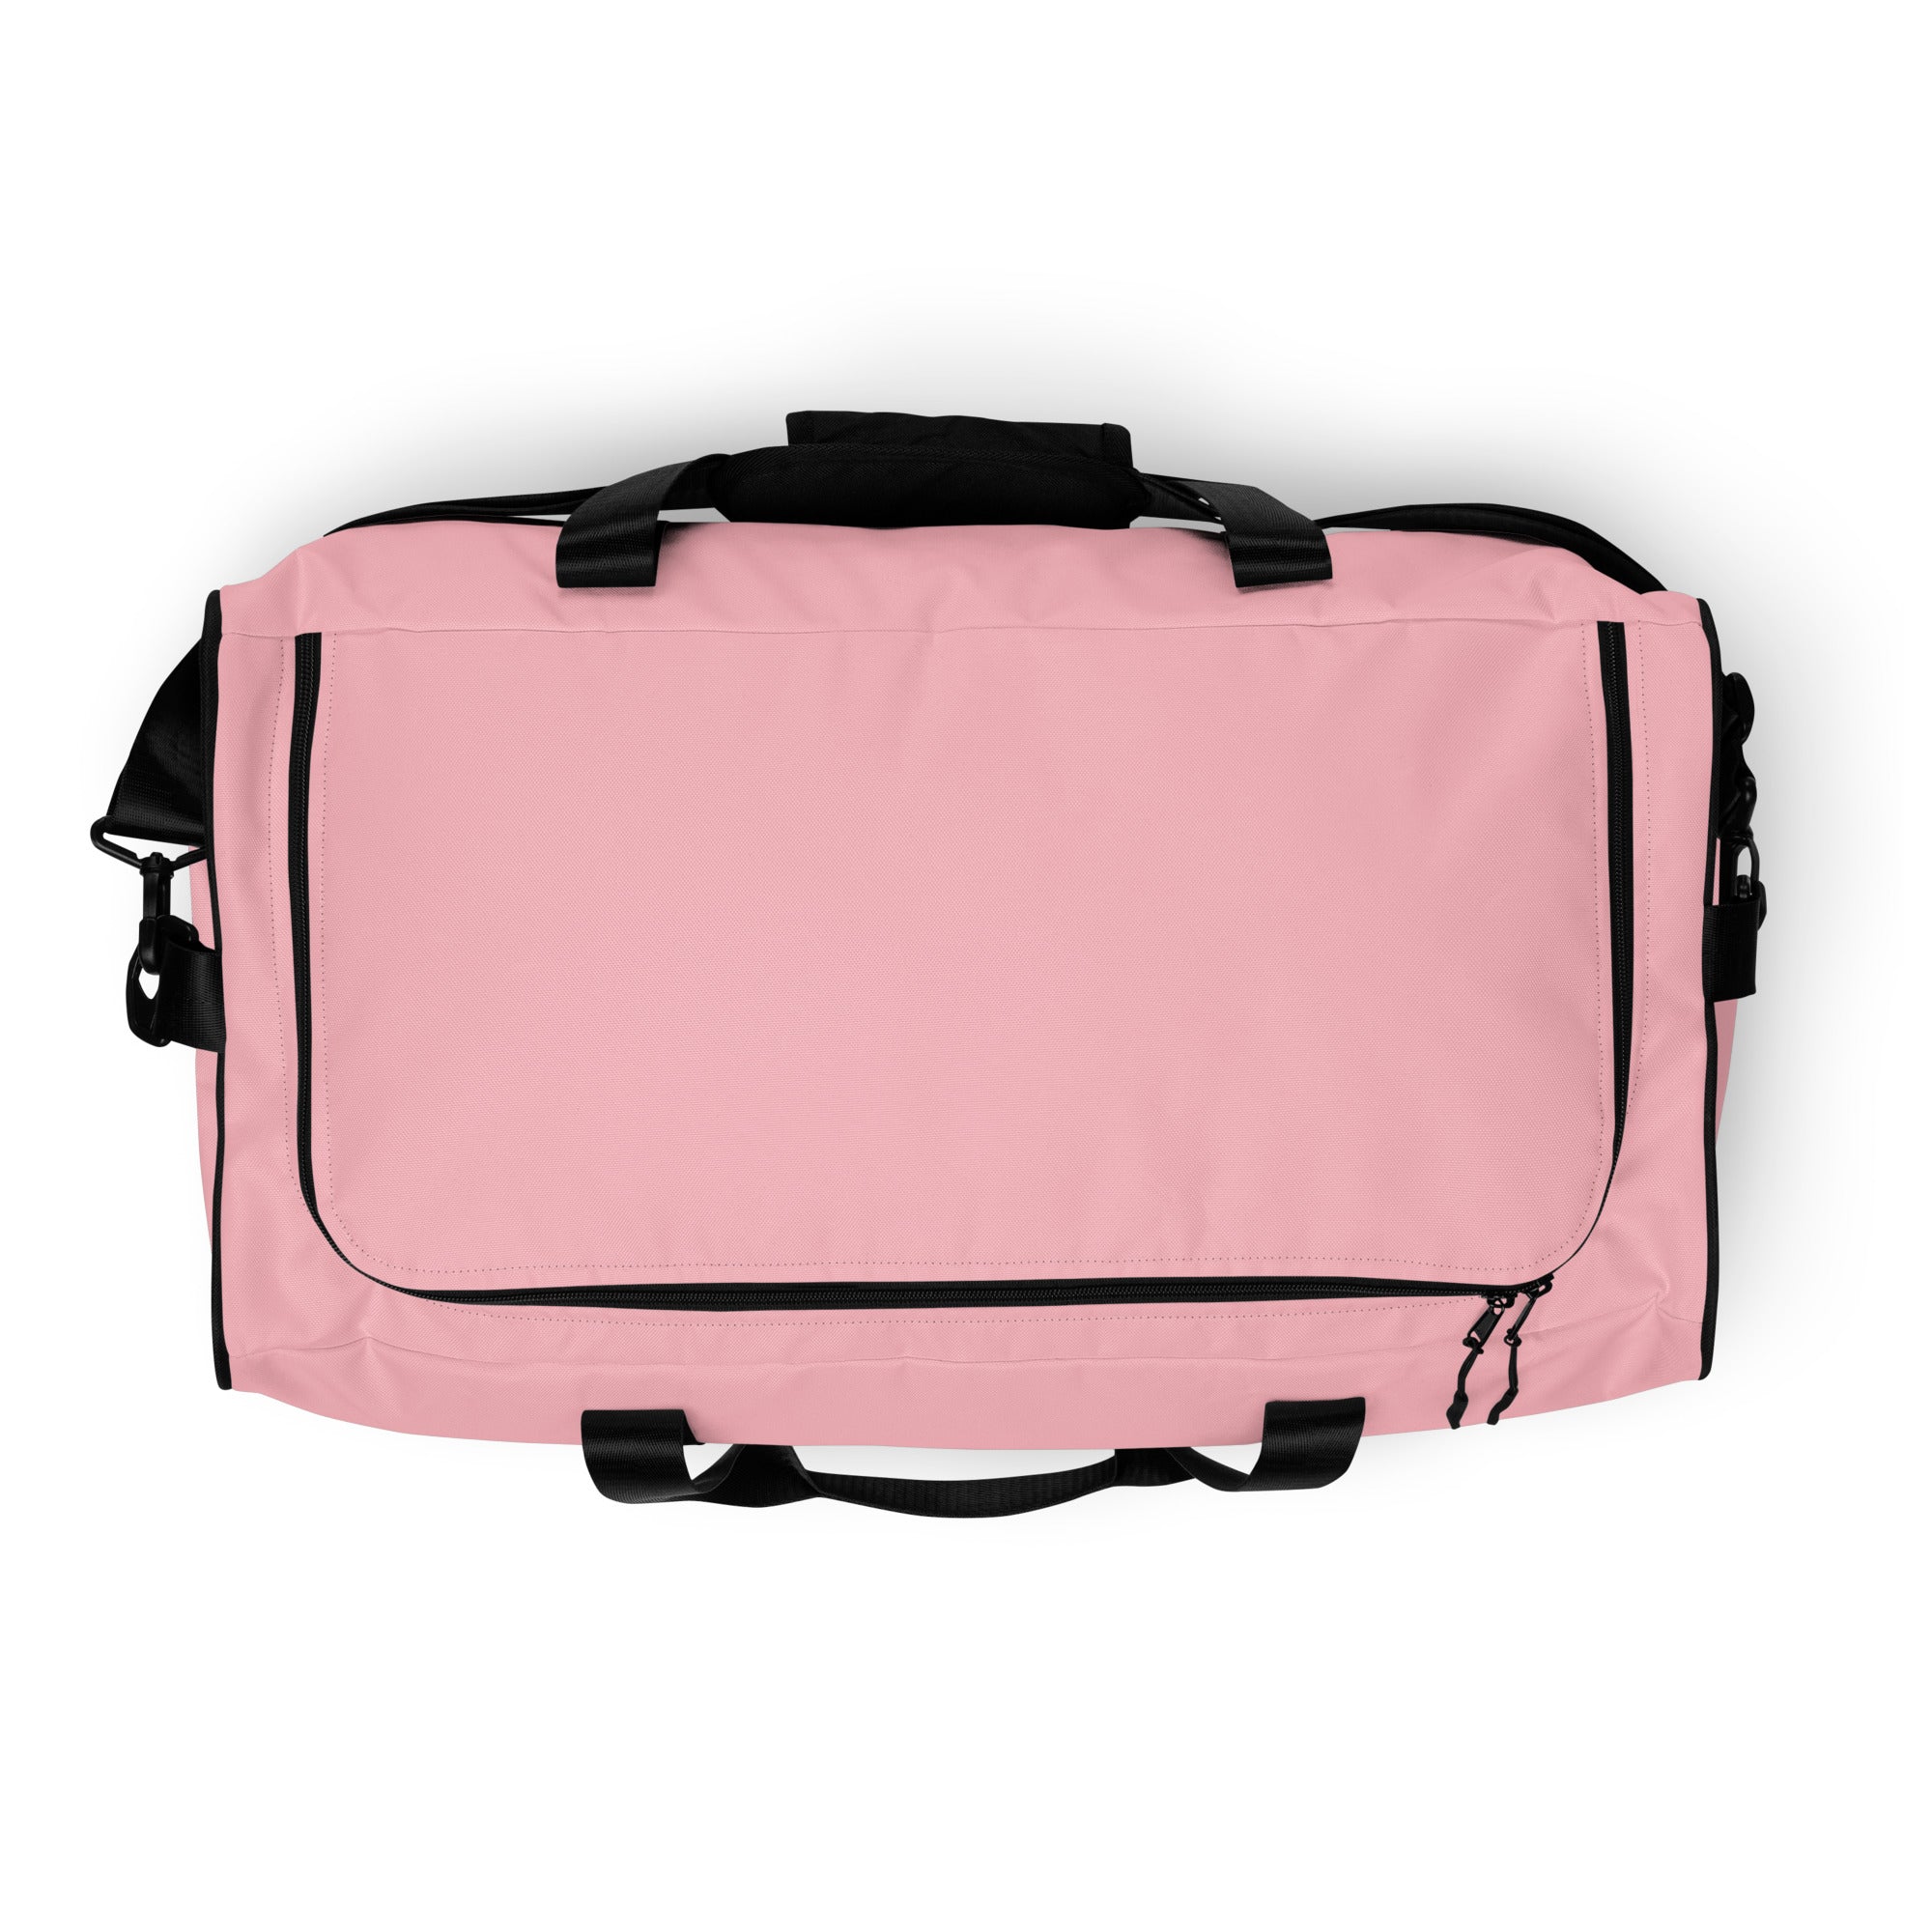 Pink & Green Duffle Bag